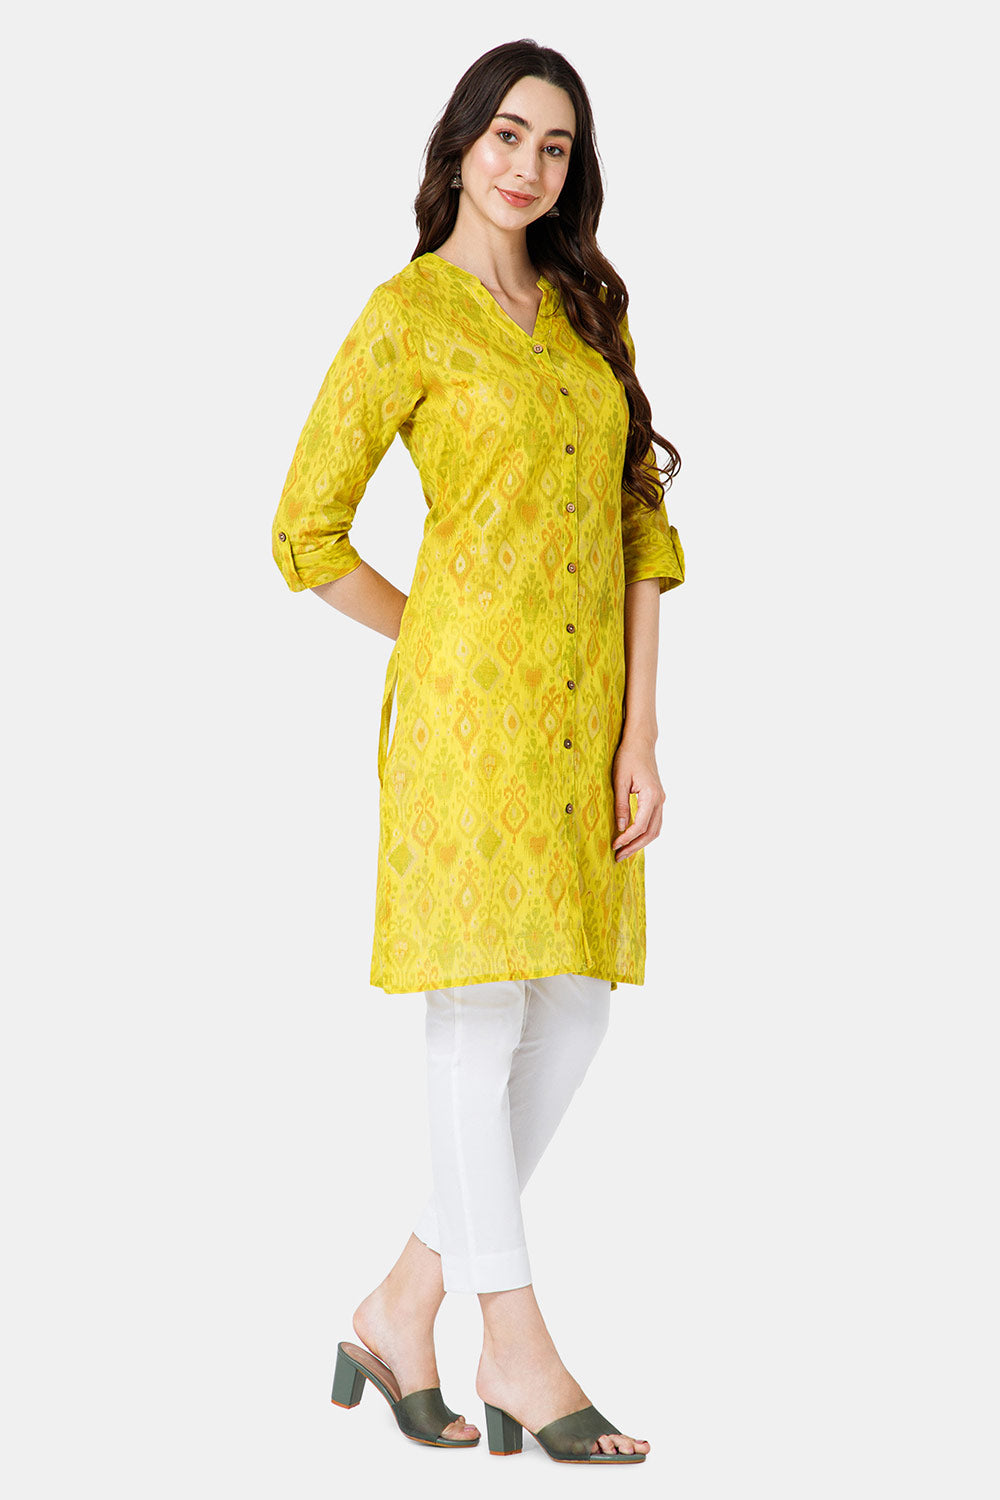 Mythri Women's Ethnic Wear Mandarin collar 3/4 sleeve with front Full placket styling - Yellow - KU37